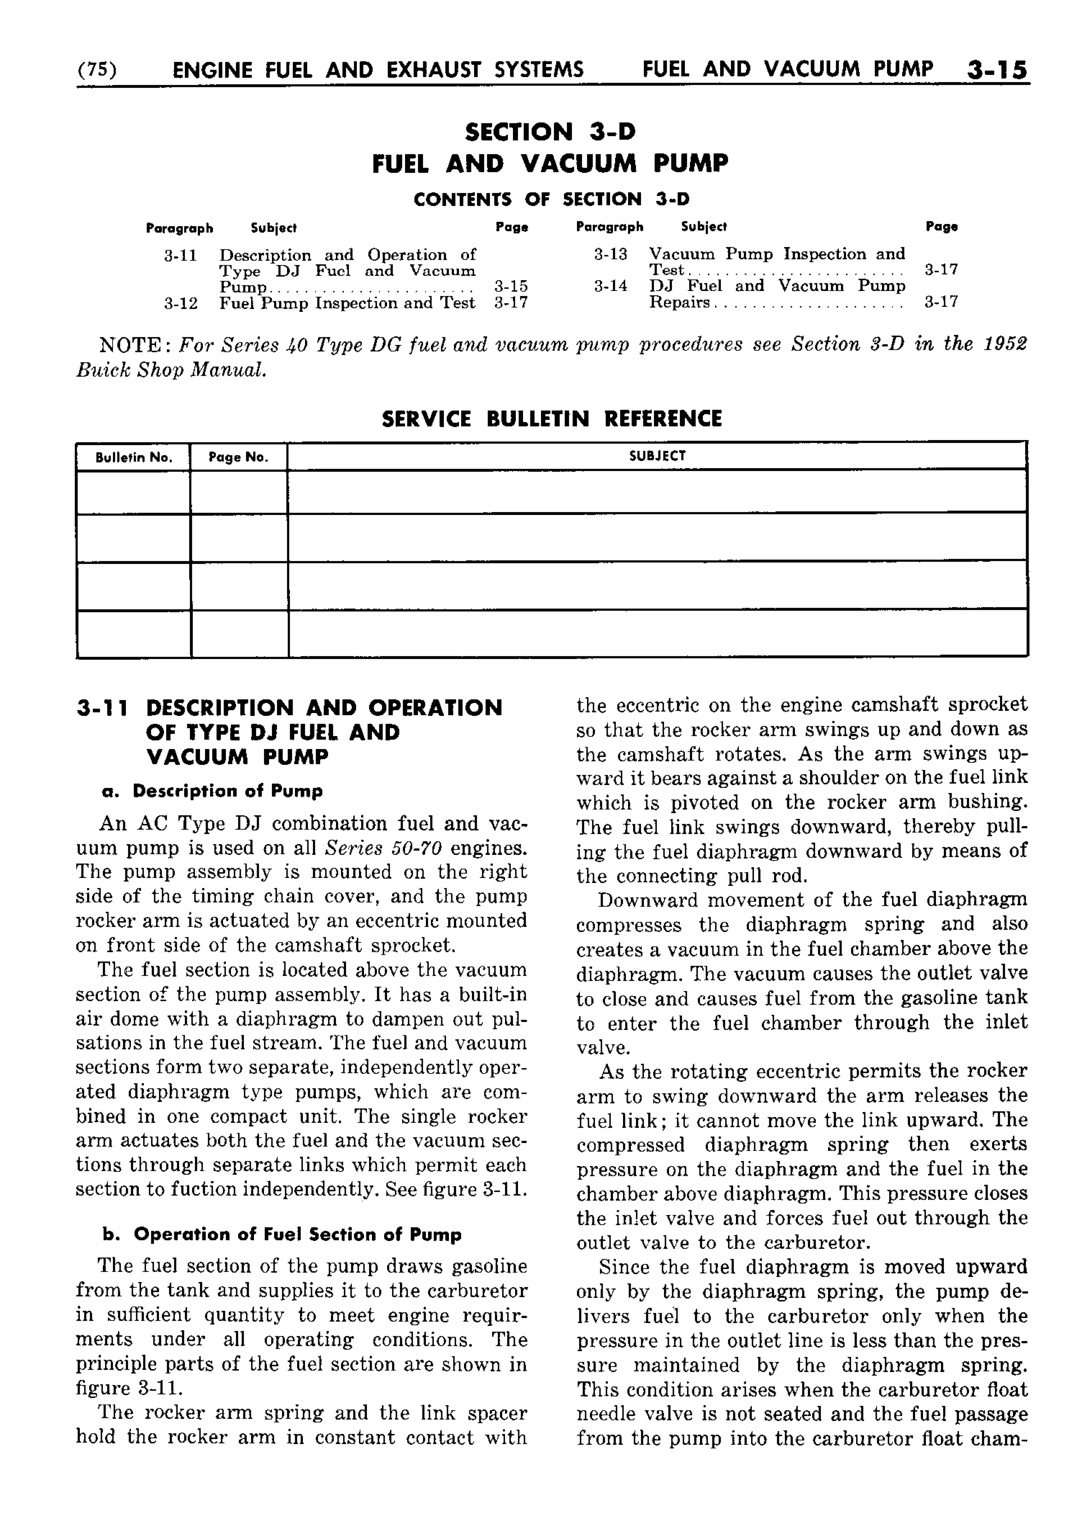 n_04 1953 Buick Shop Manual - Engine Fuel & Exhaust-015-015.jpg